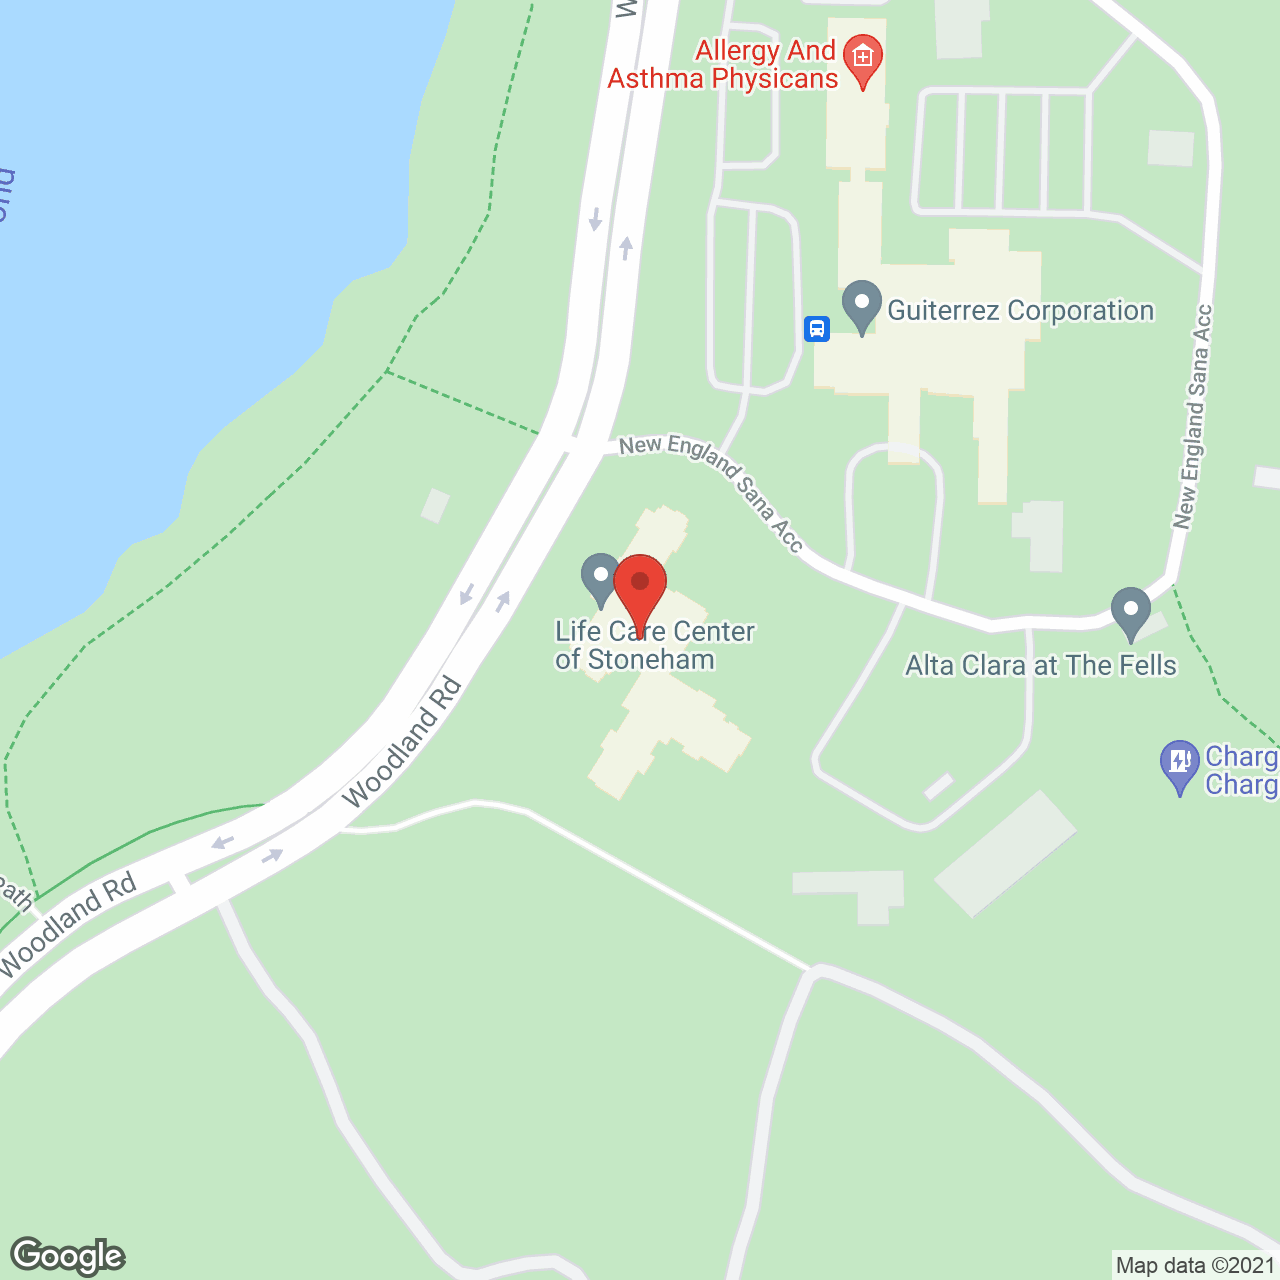 Life Care Center of Stoneham in google map